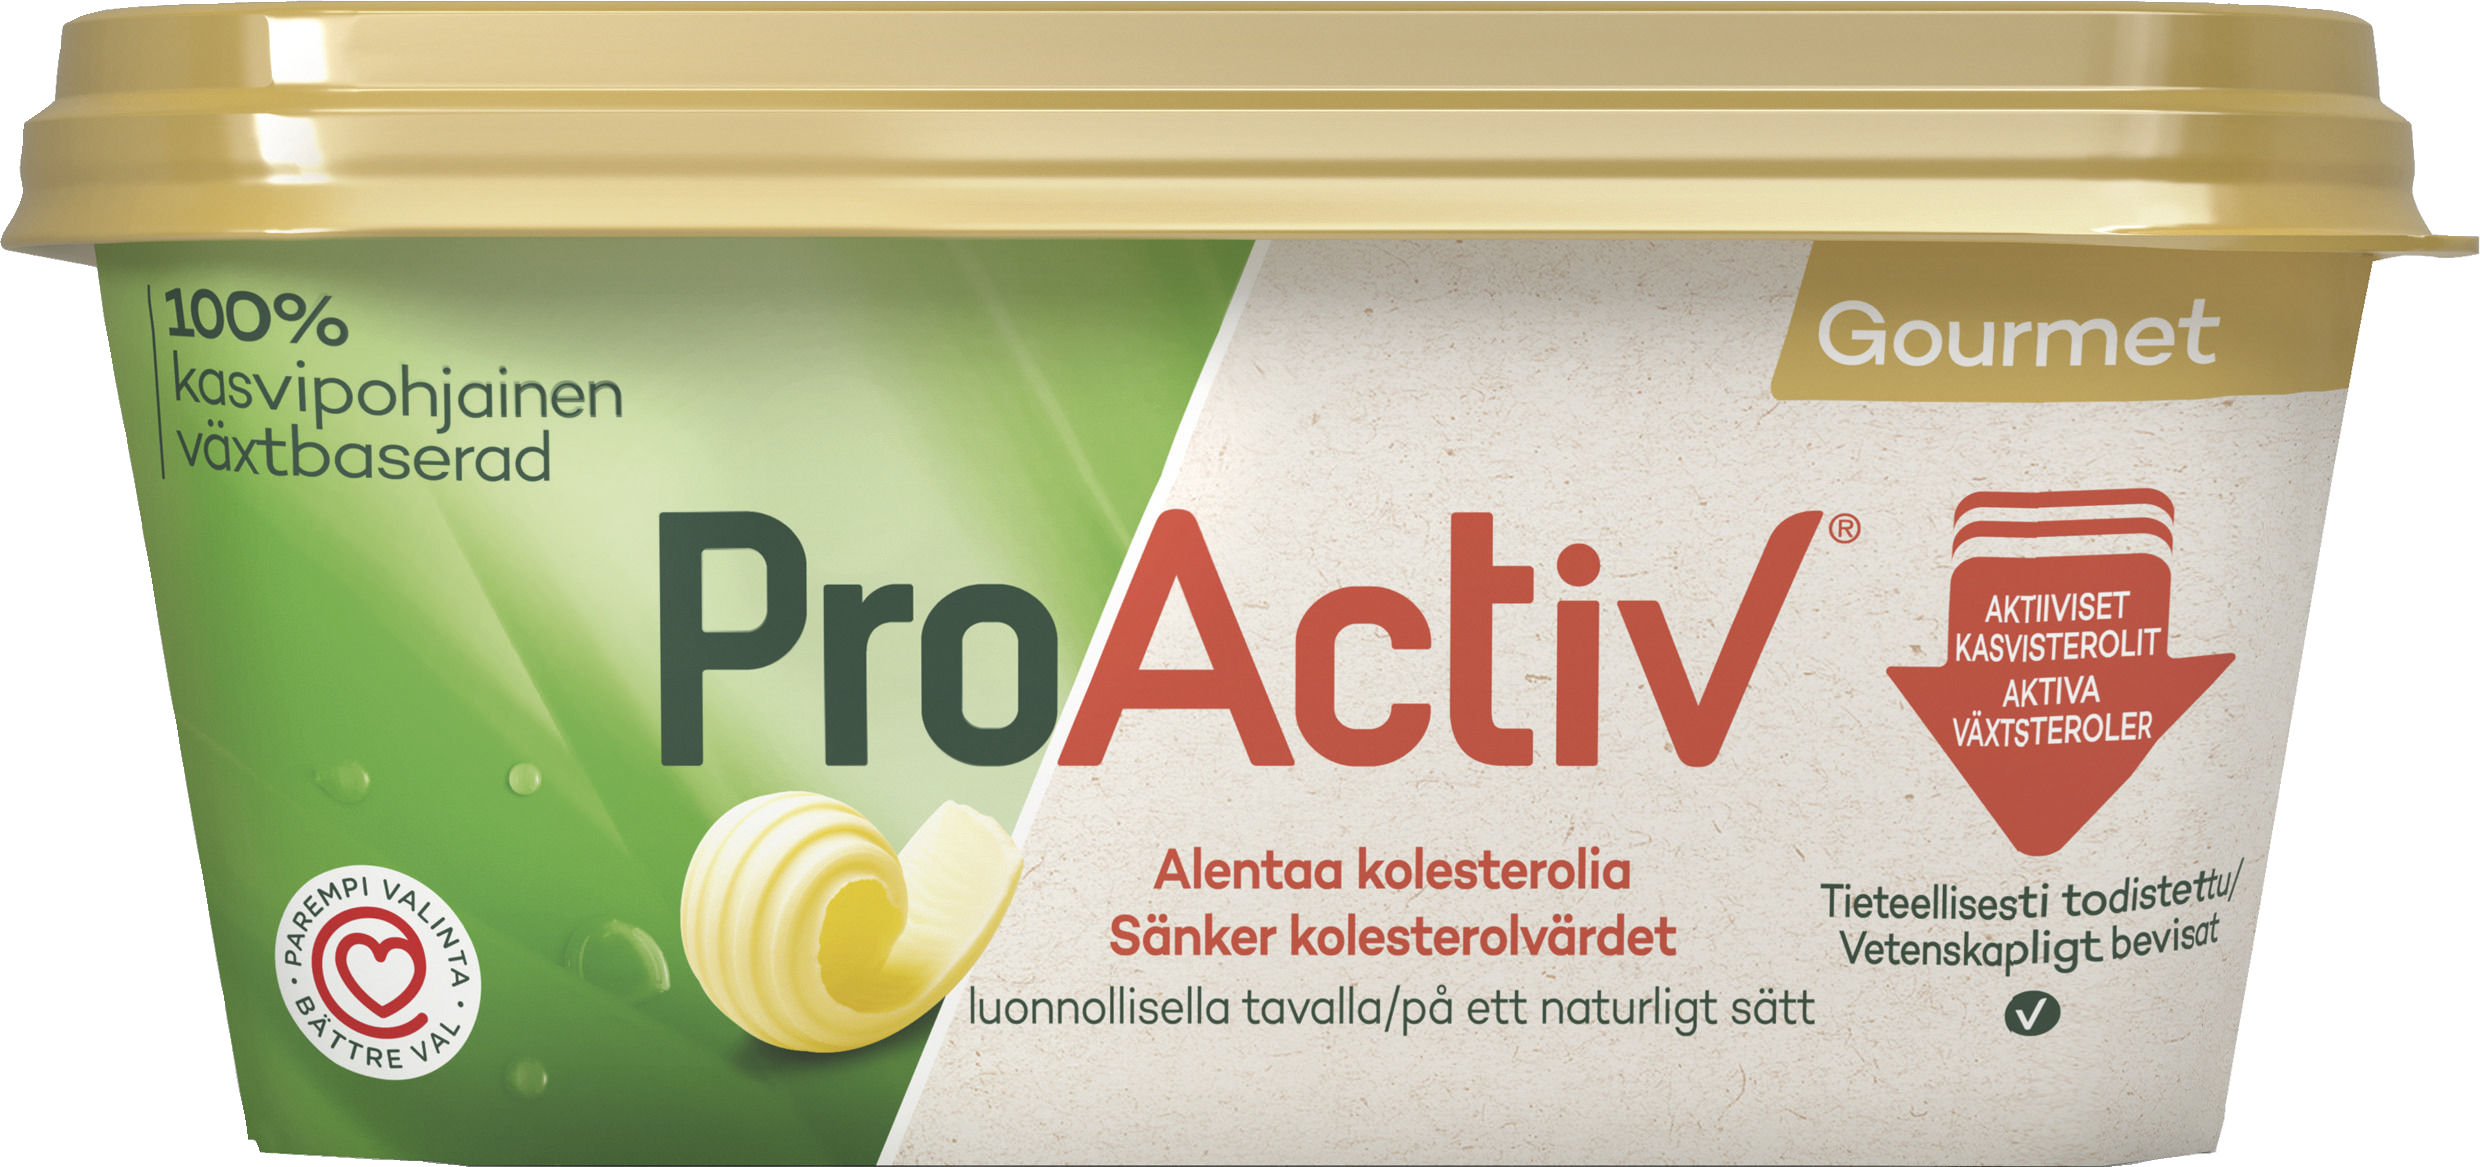 ProActiv 450g 59% Gourmet kasvirasvalevite